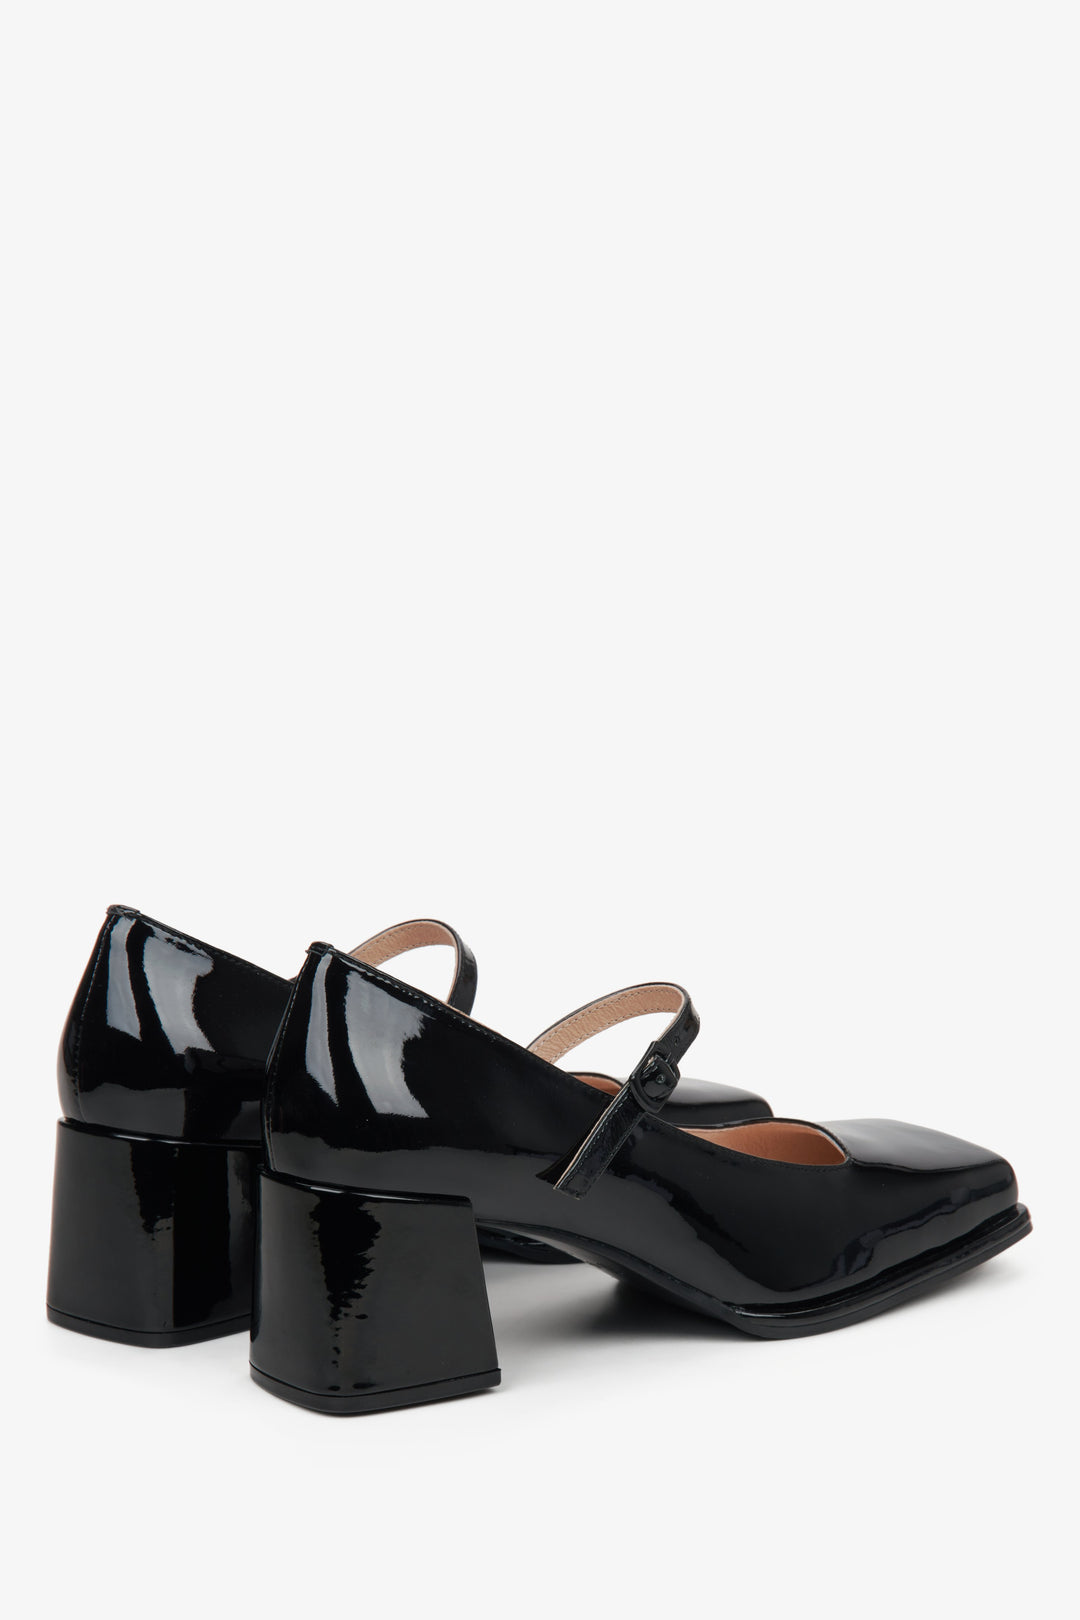 Women's elegant black patent leather pumps Estro - a close-up on shoe heel counter.